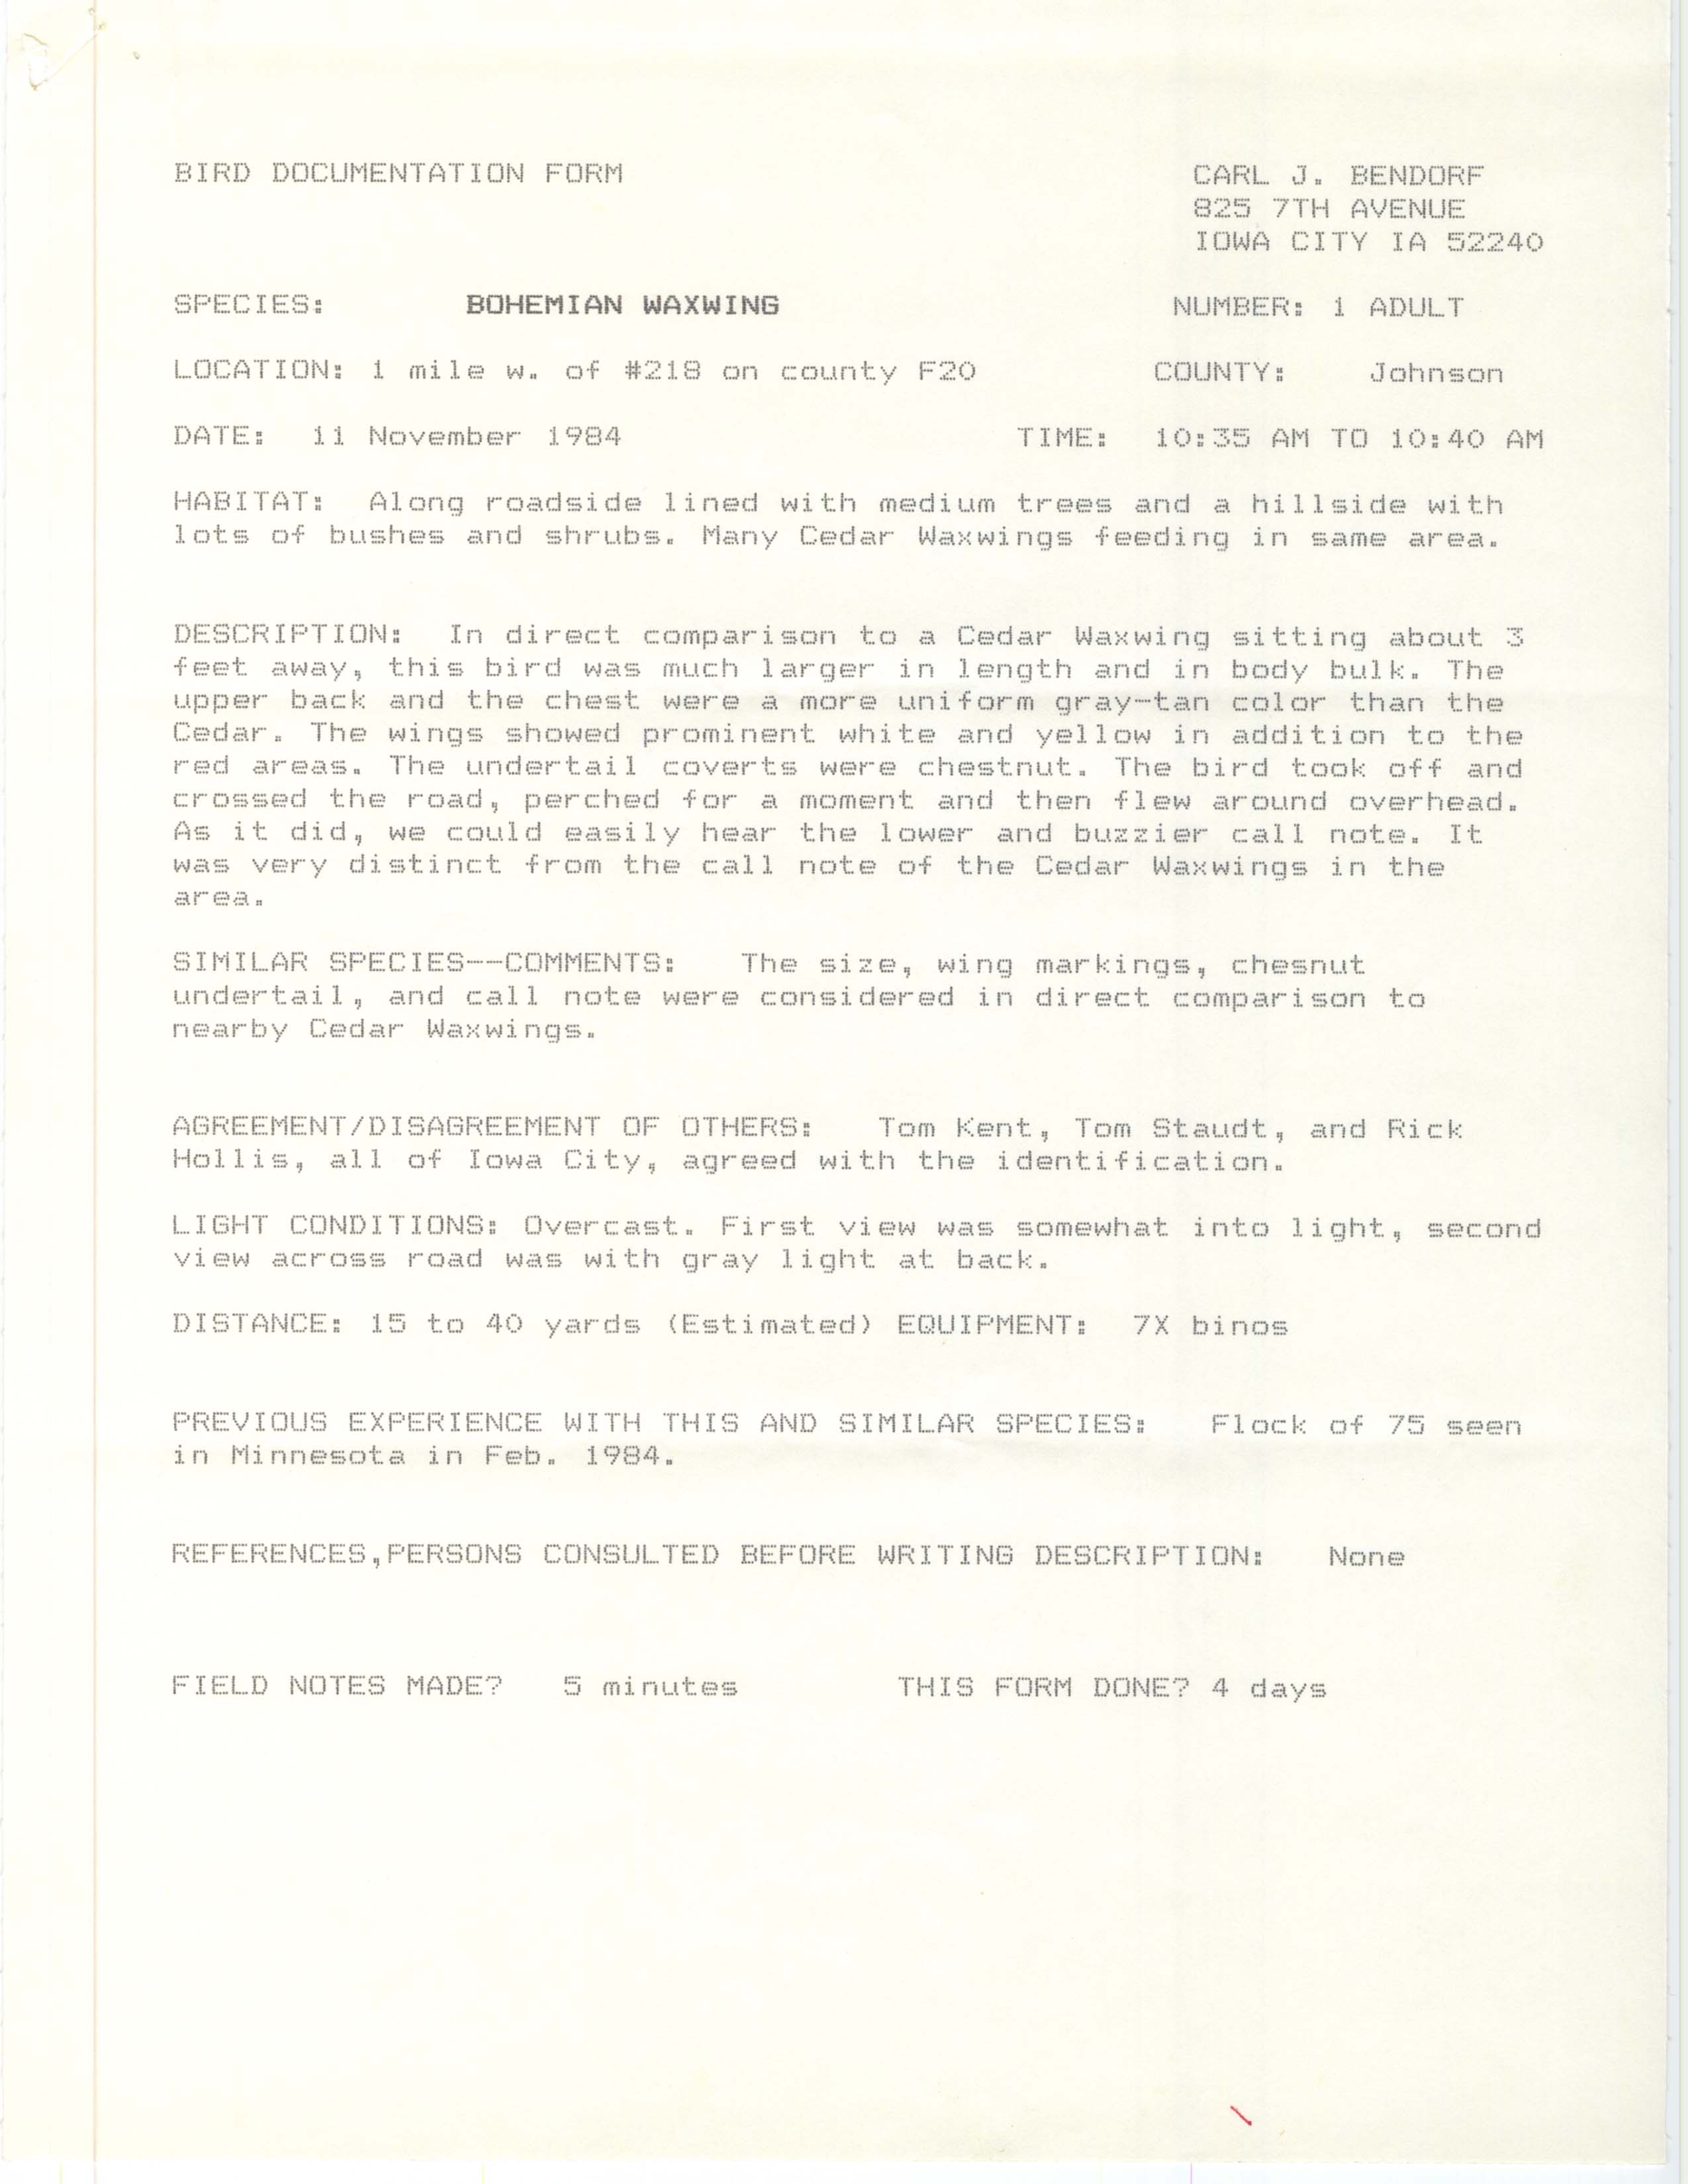 Rare bird documentation form for Bohemian Waxwing at Iowa City, 1984